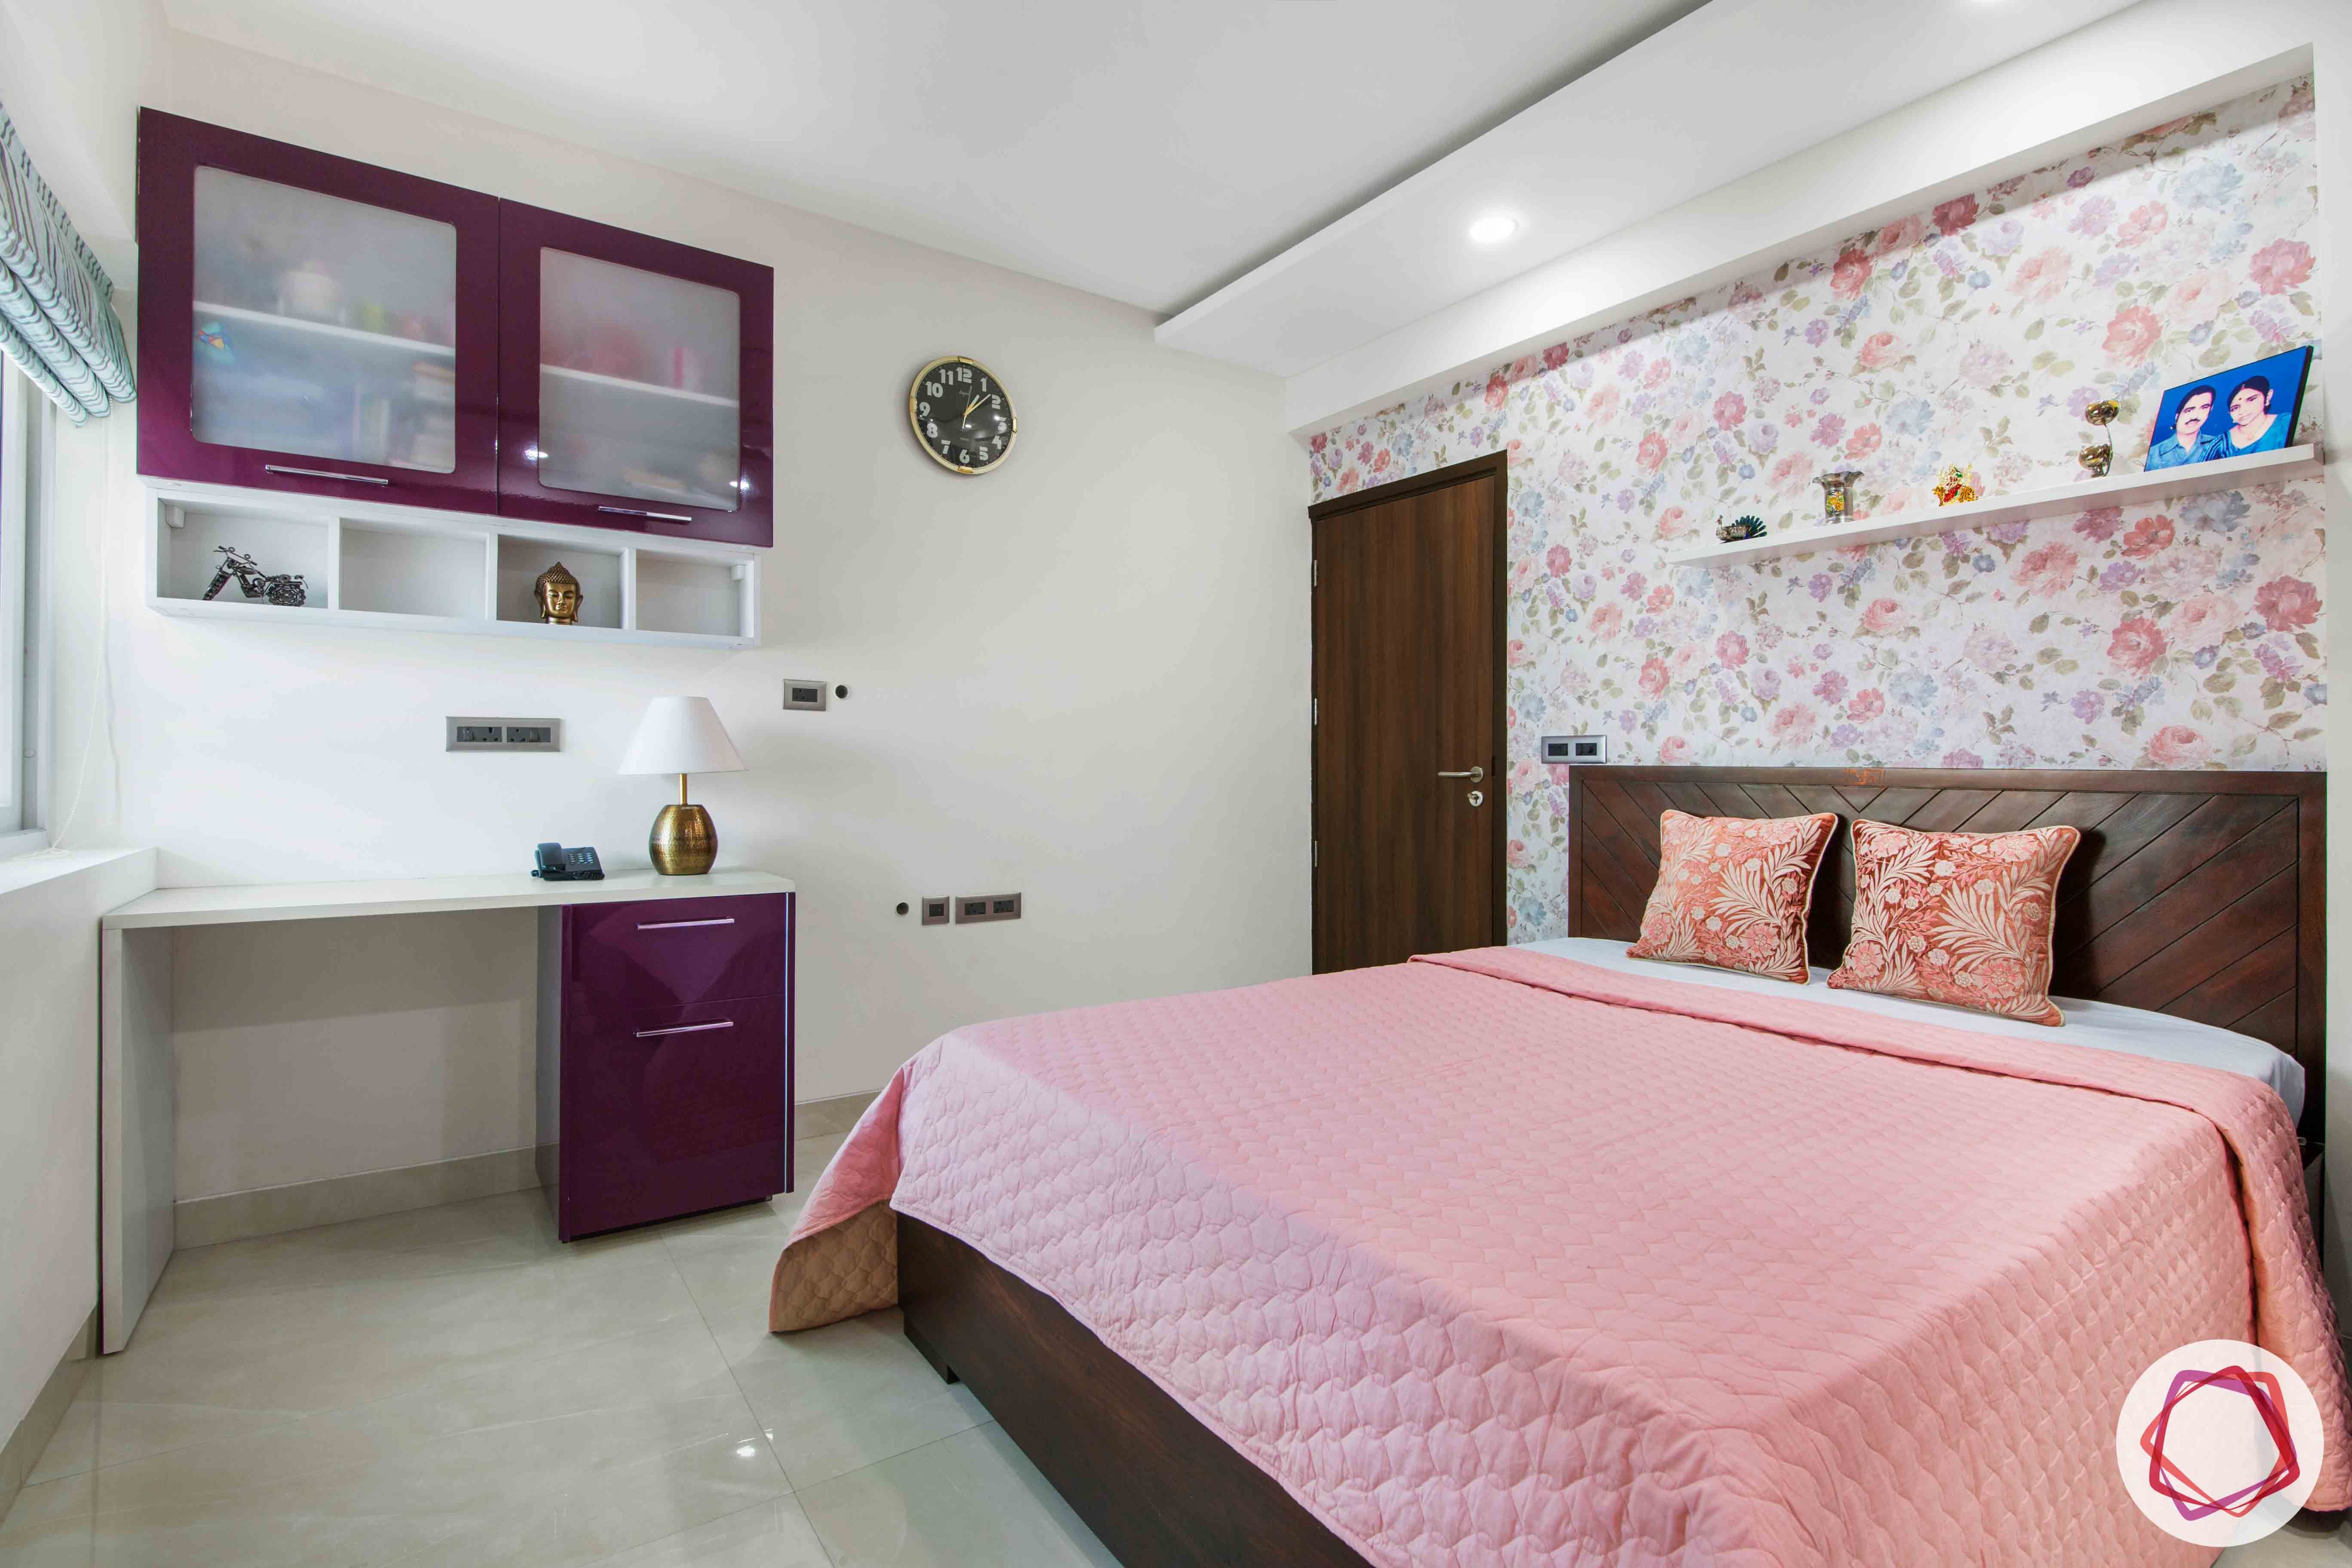 parents-bedroom-purple-study-drawers-bed-shelves-floral-wallpaper